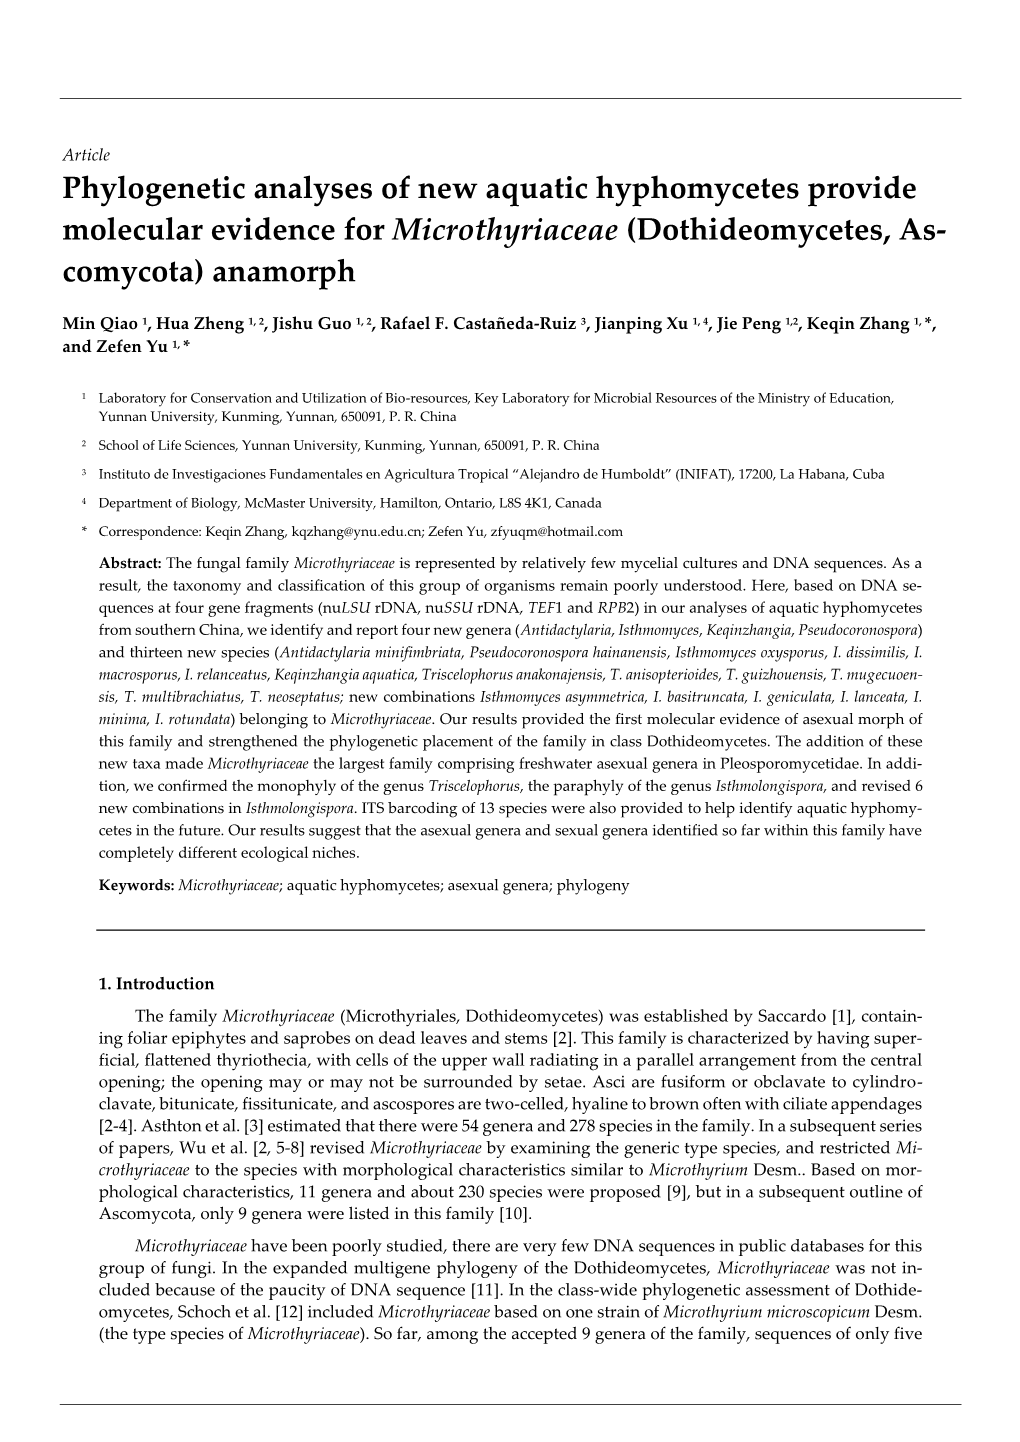 Phylogenetic Analyses of New Aquatic Hyphomycetes Provide Molecular Evidence for Microthyriaceae (Dothideomycetes, As- Comycota) Anamorph